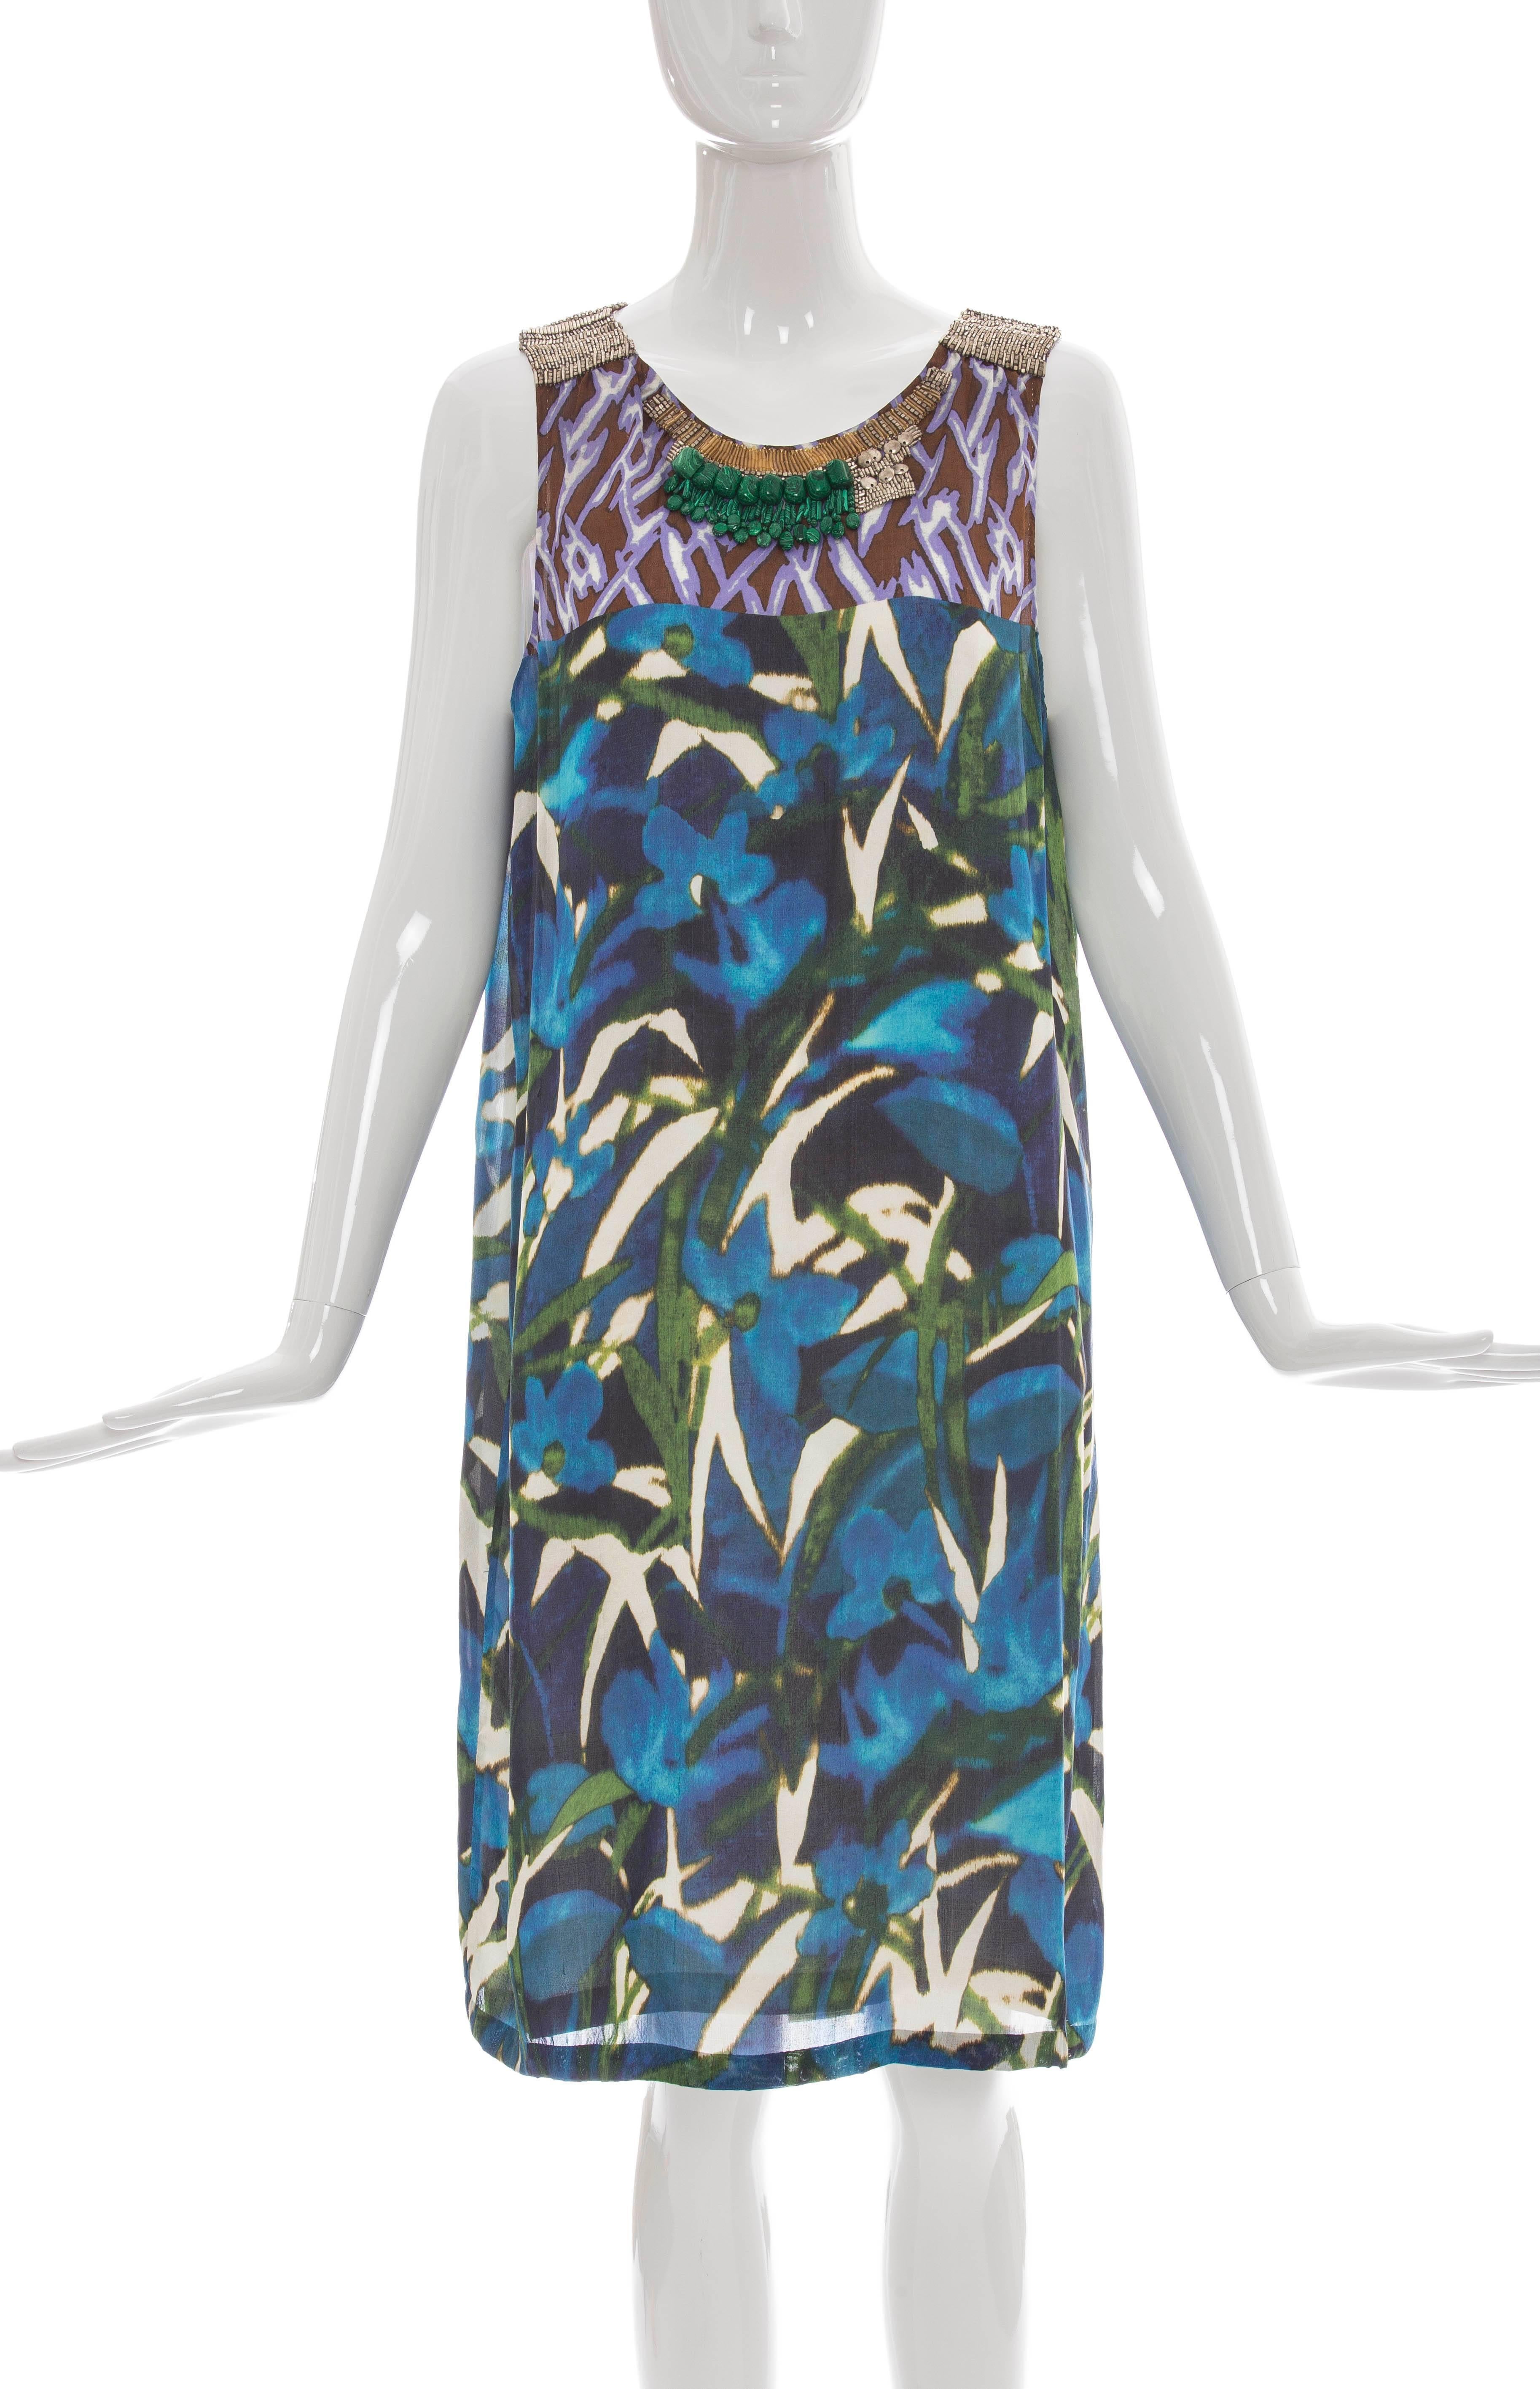 Dries Van Noten, Spring-Summer 2008, sleeveless silk dress with print throughout and beaded embellishments at neckline.

FR 40
US 8
Bust 40”, Waist 40”, Hip 42”, Length 39”